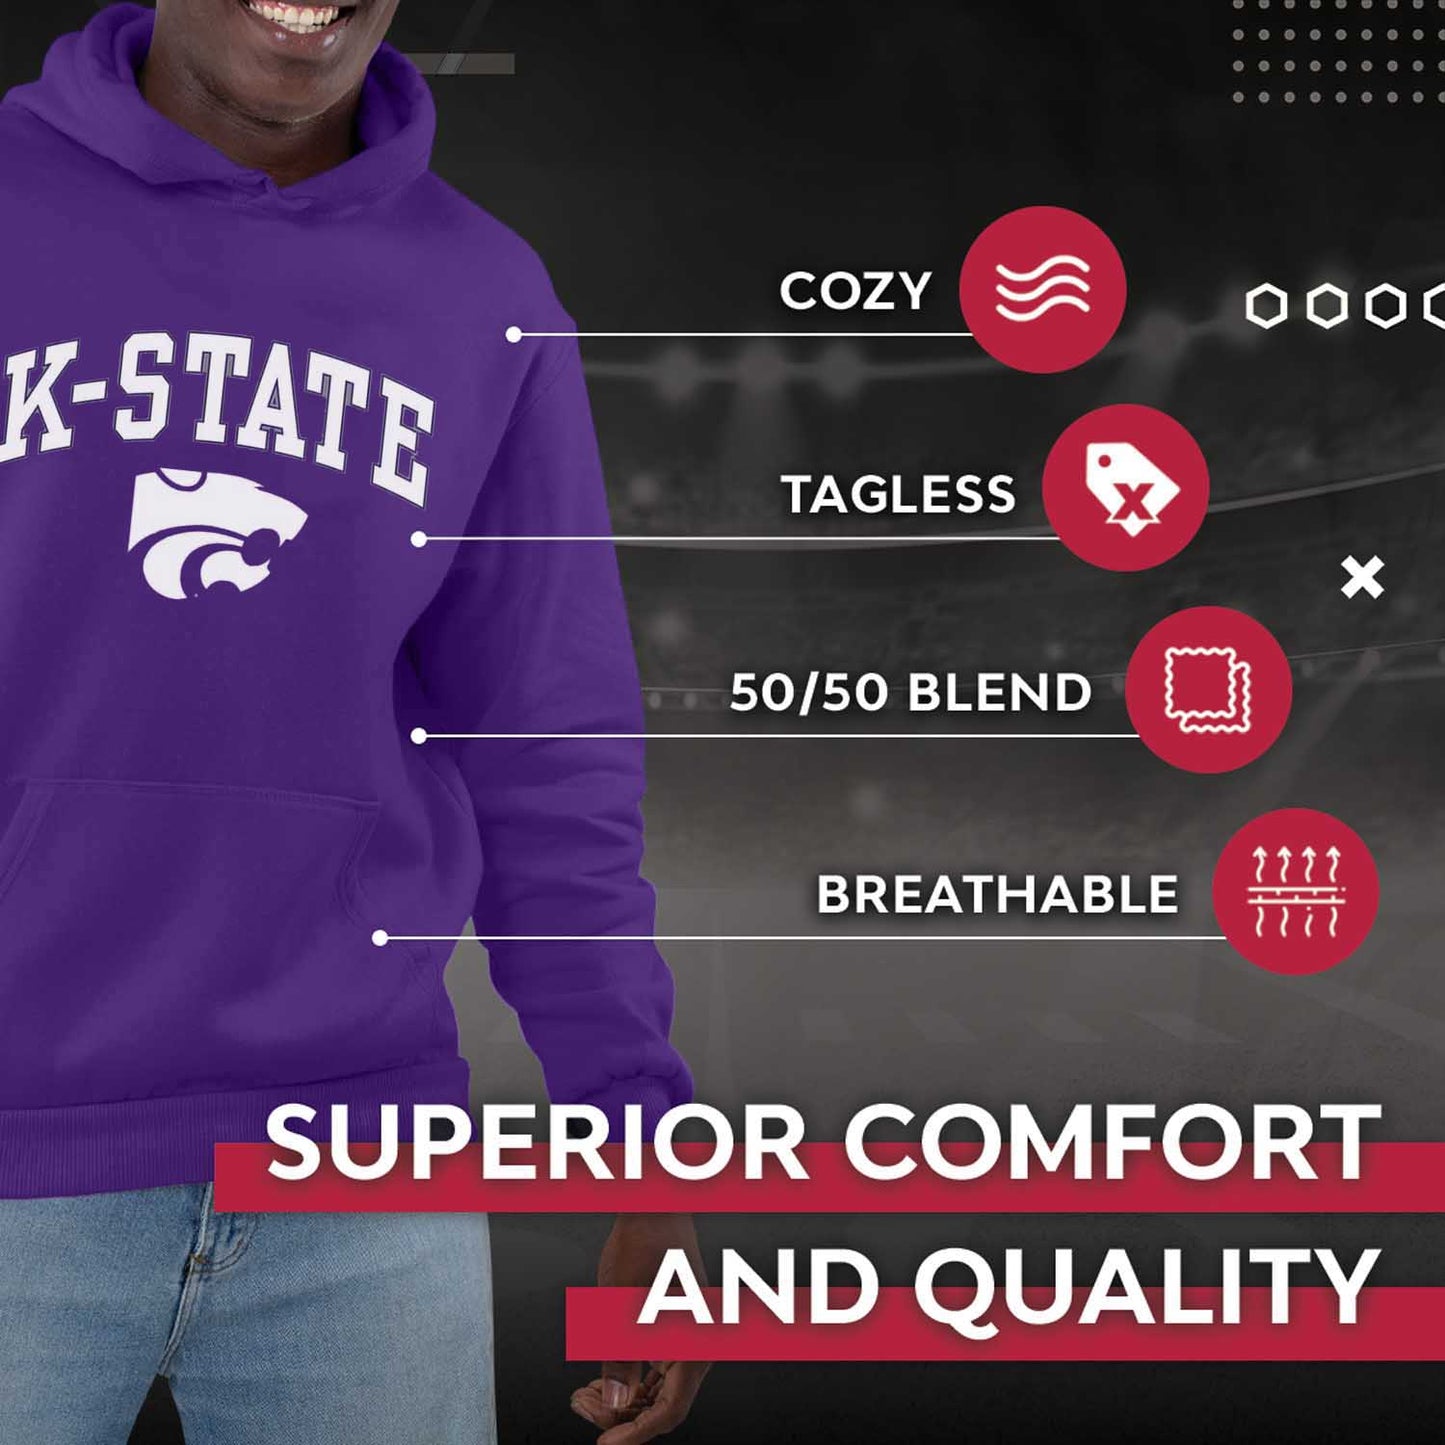 Kansas State Wildcats Adult Arch & Logo Soft Style Gameday Hooded Sweatshirt - Purple